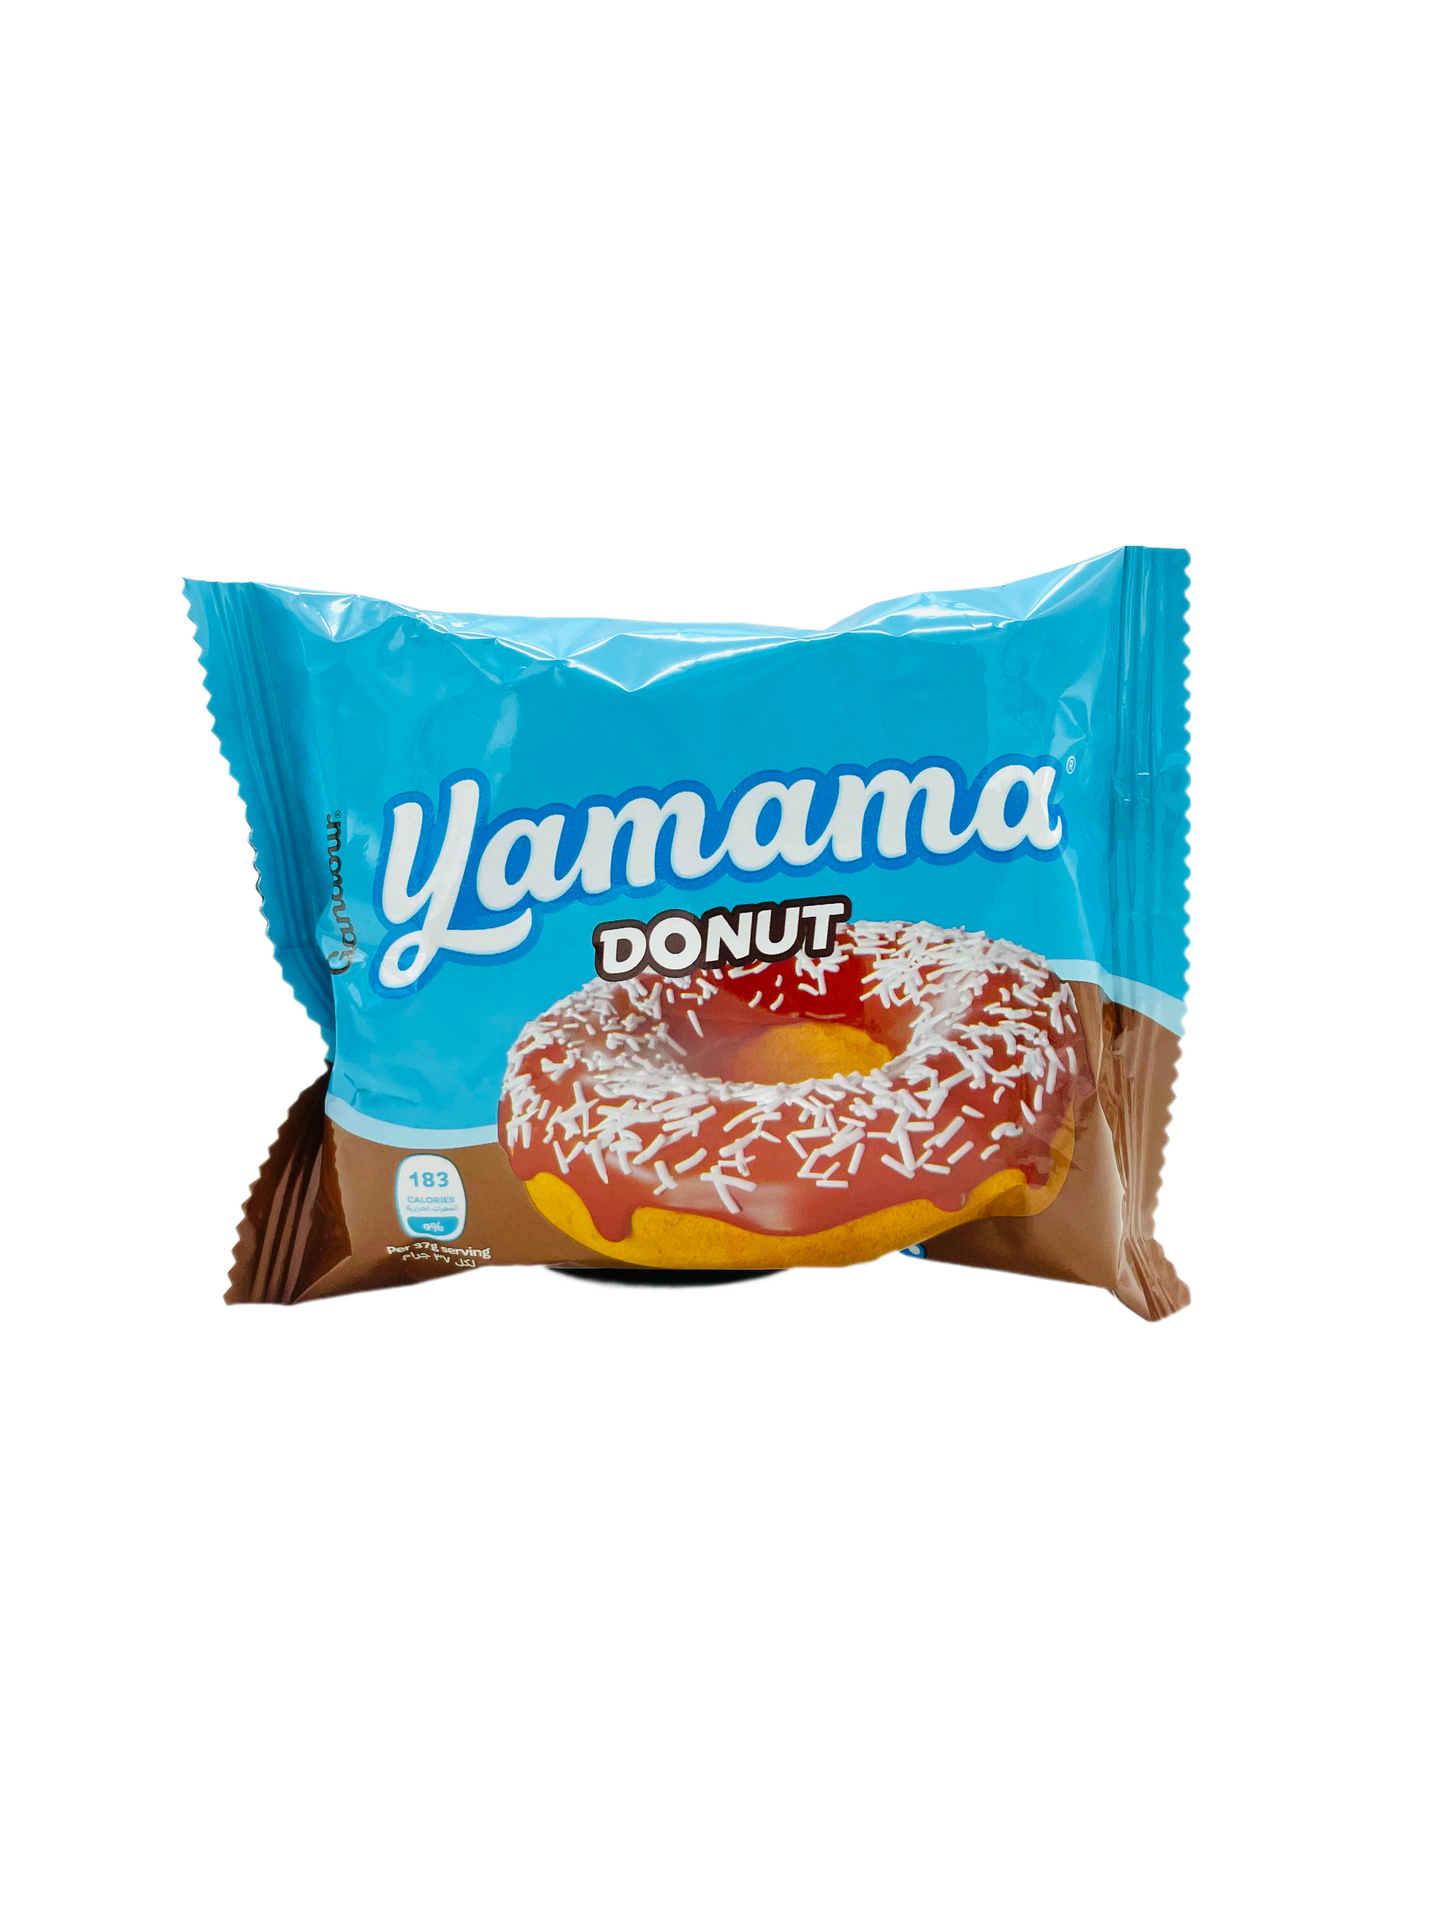 Yamama Donut Choc Flavoured